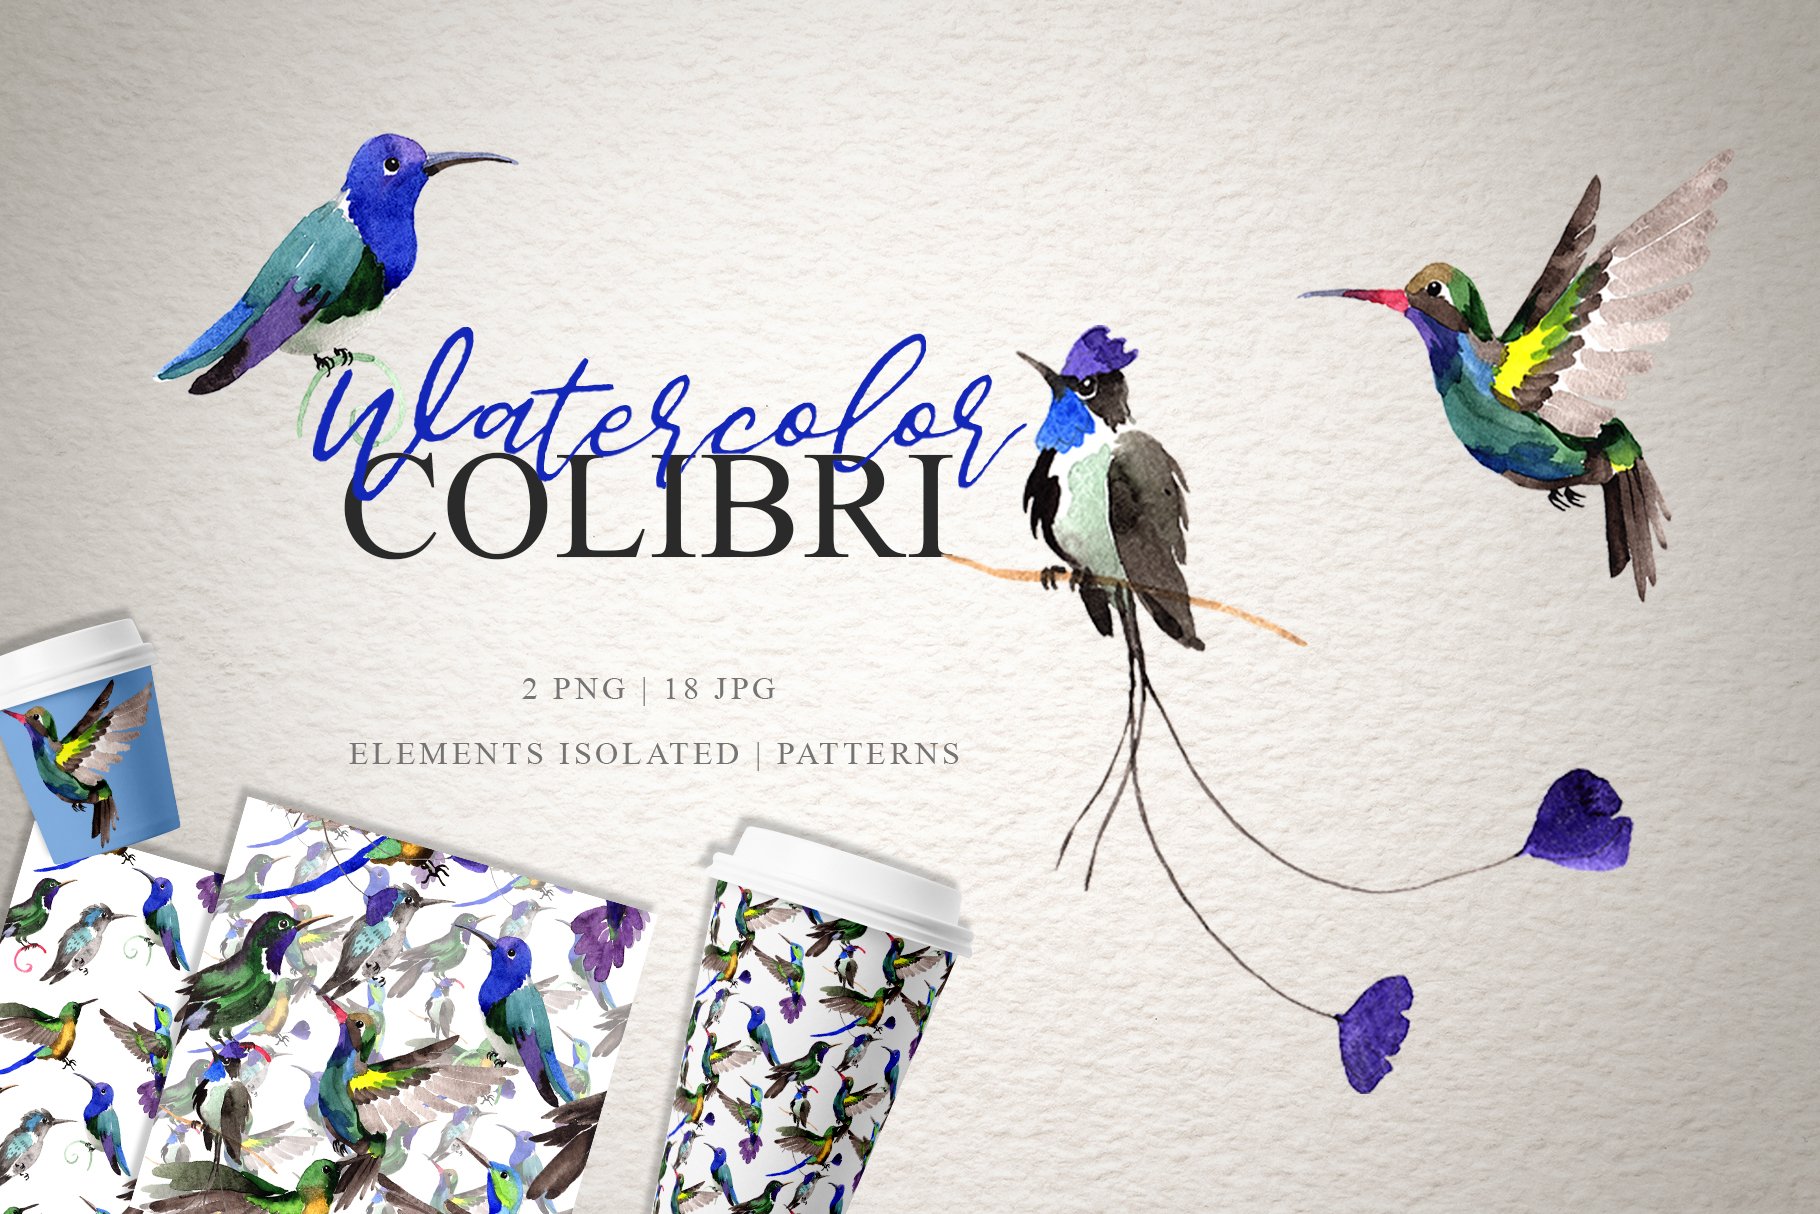 Colibri Watercolor png cover image.